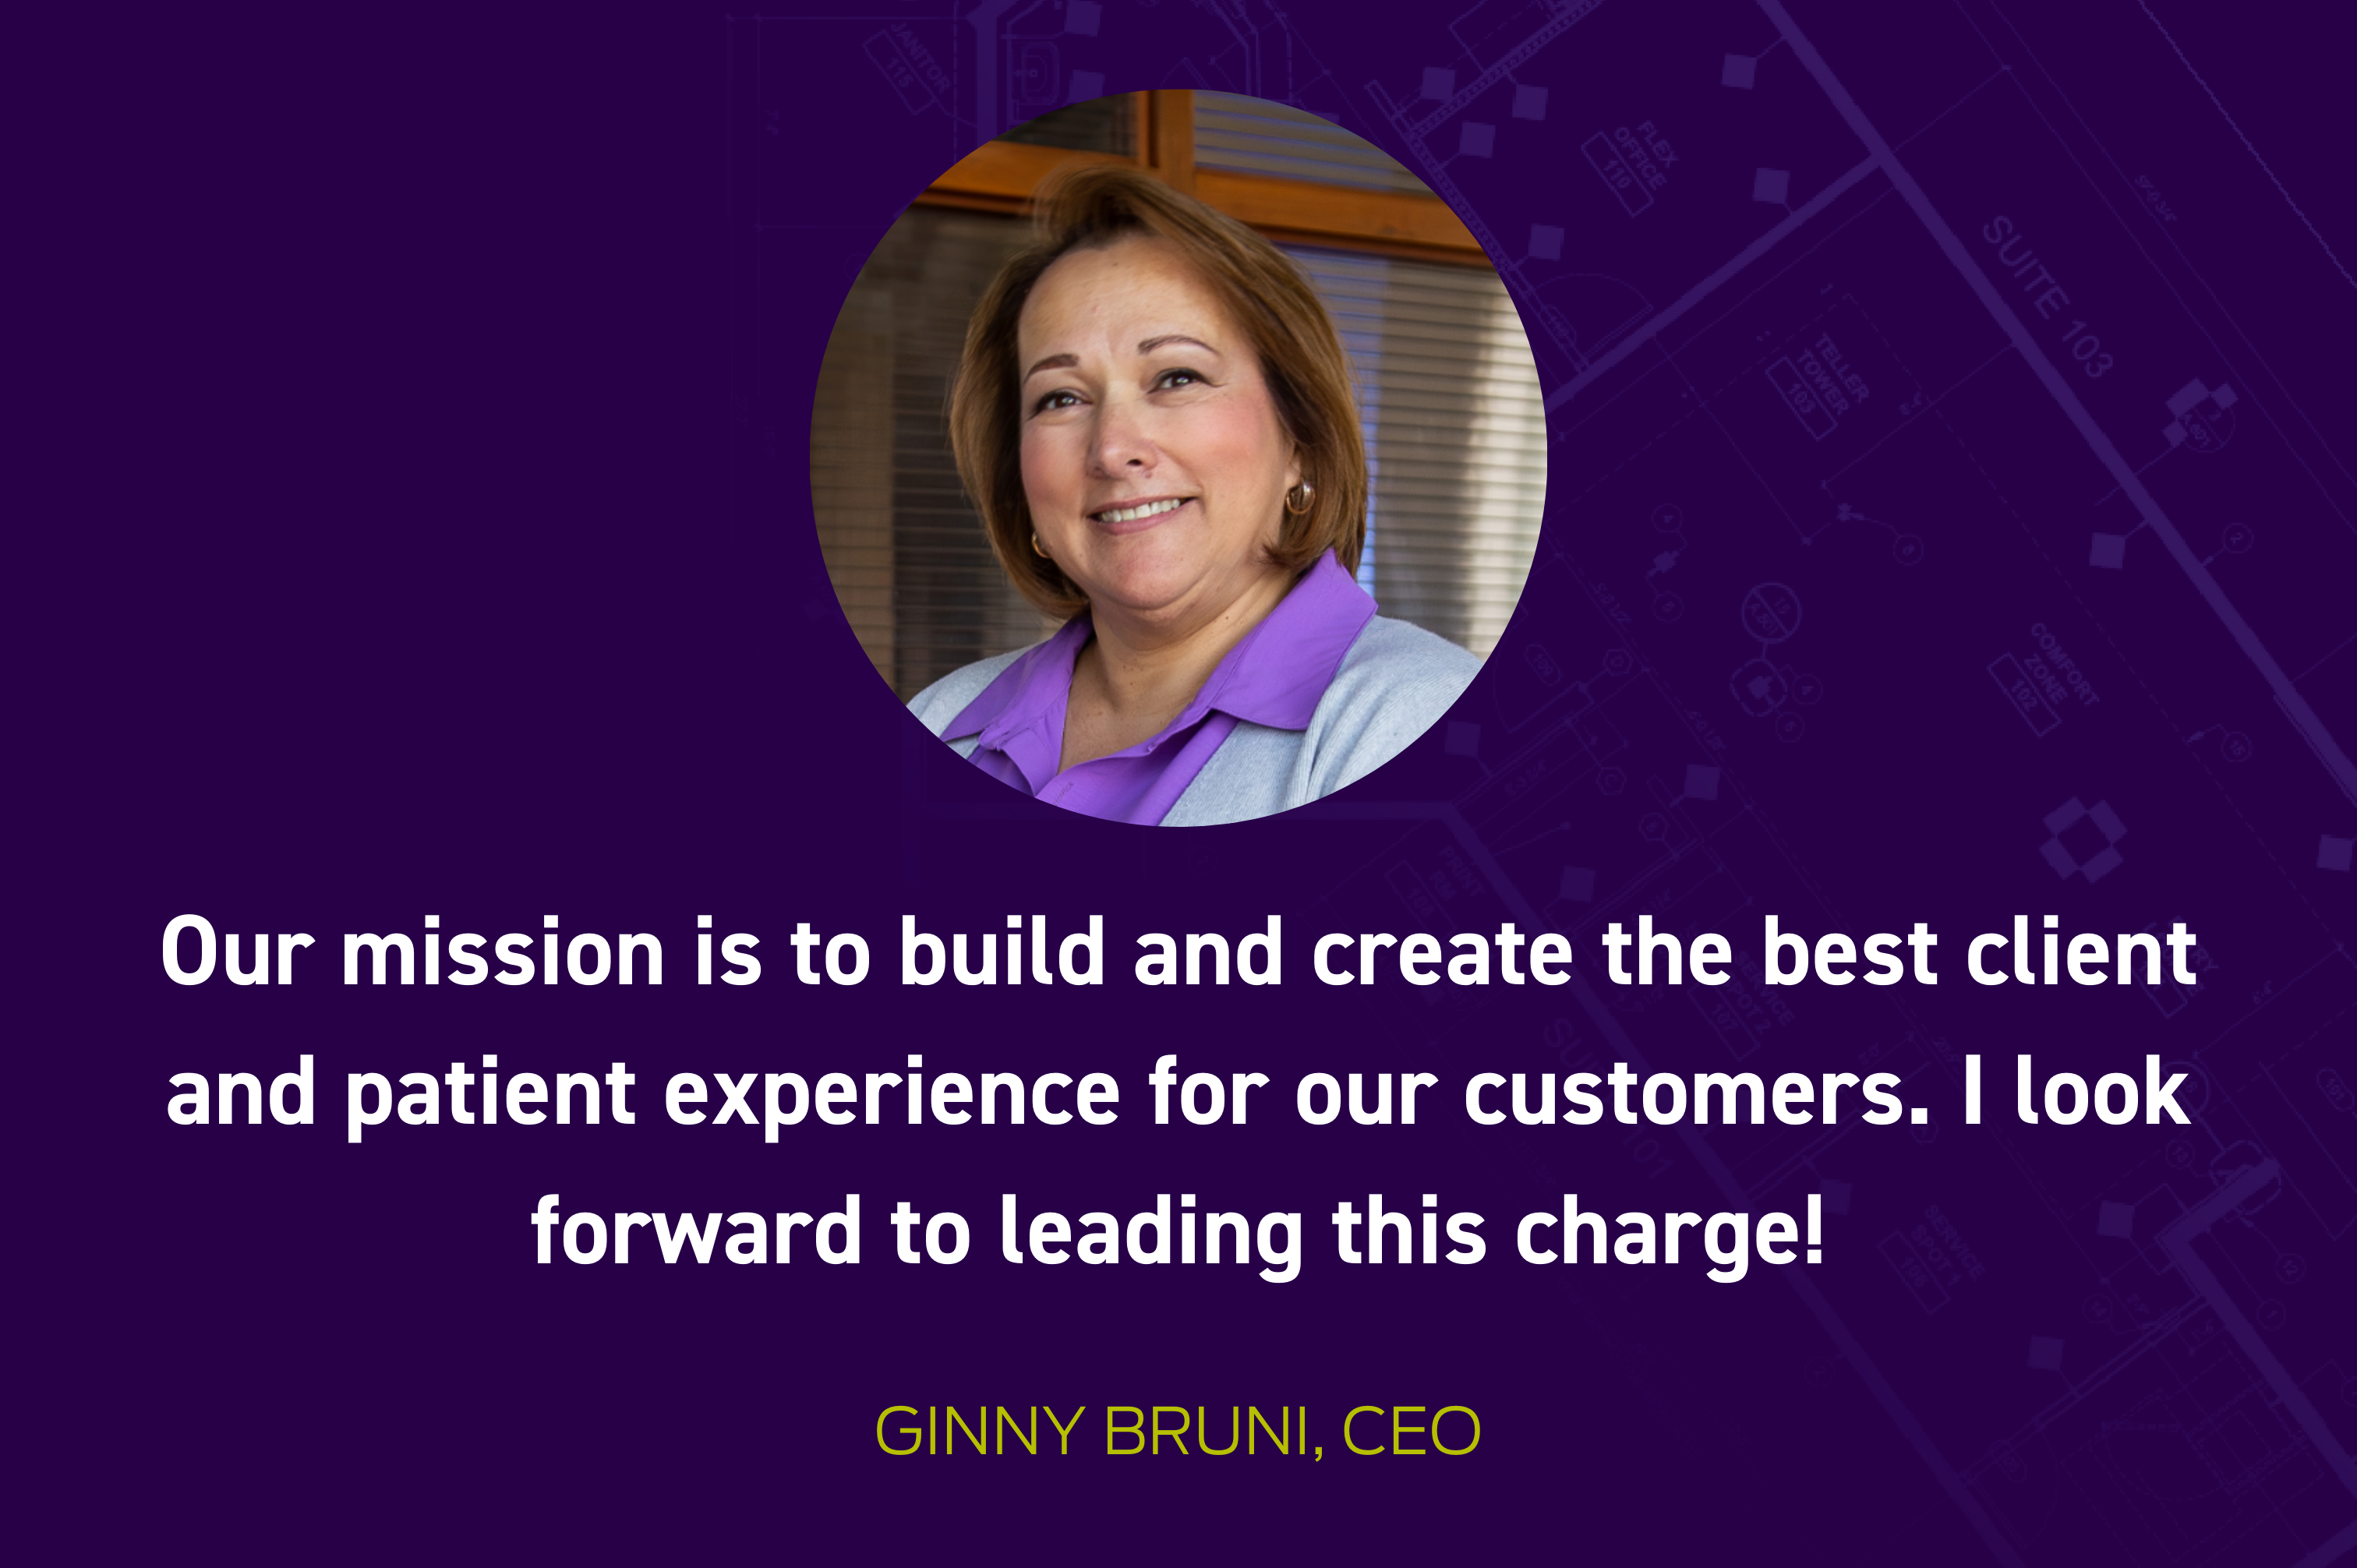 DBSI, Inc. Announces Ginny Bruni as CEO, New CFO, CTO, and VP Leadership Team